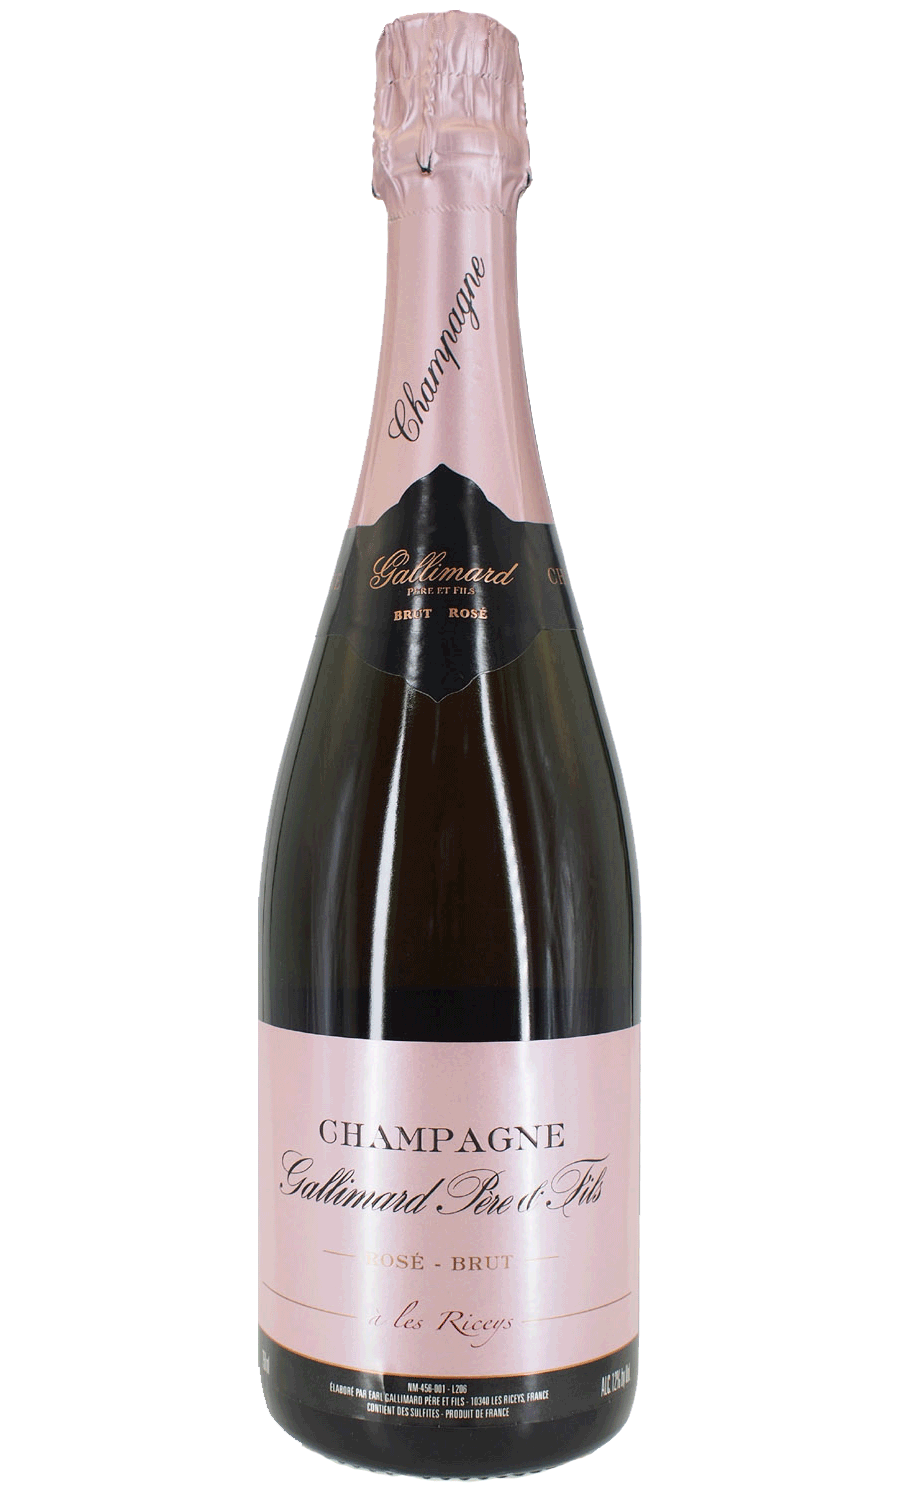 Gallimard Champagne Rosé brut